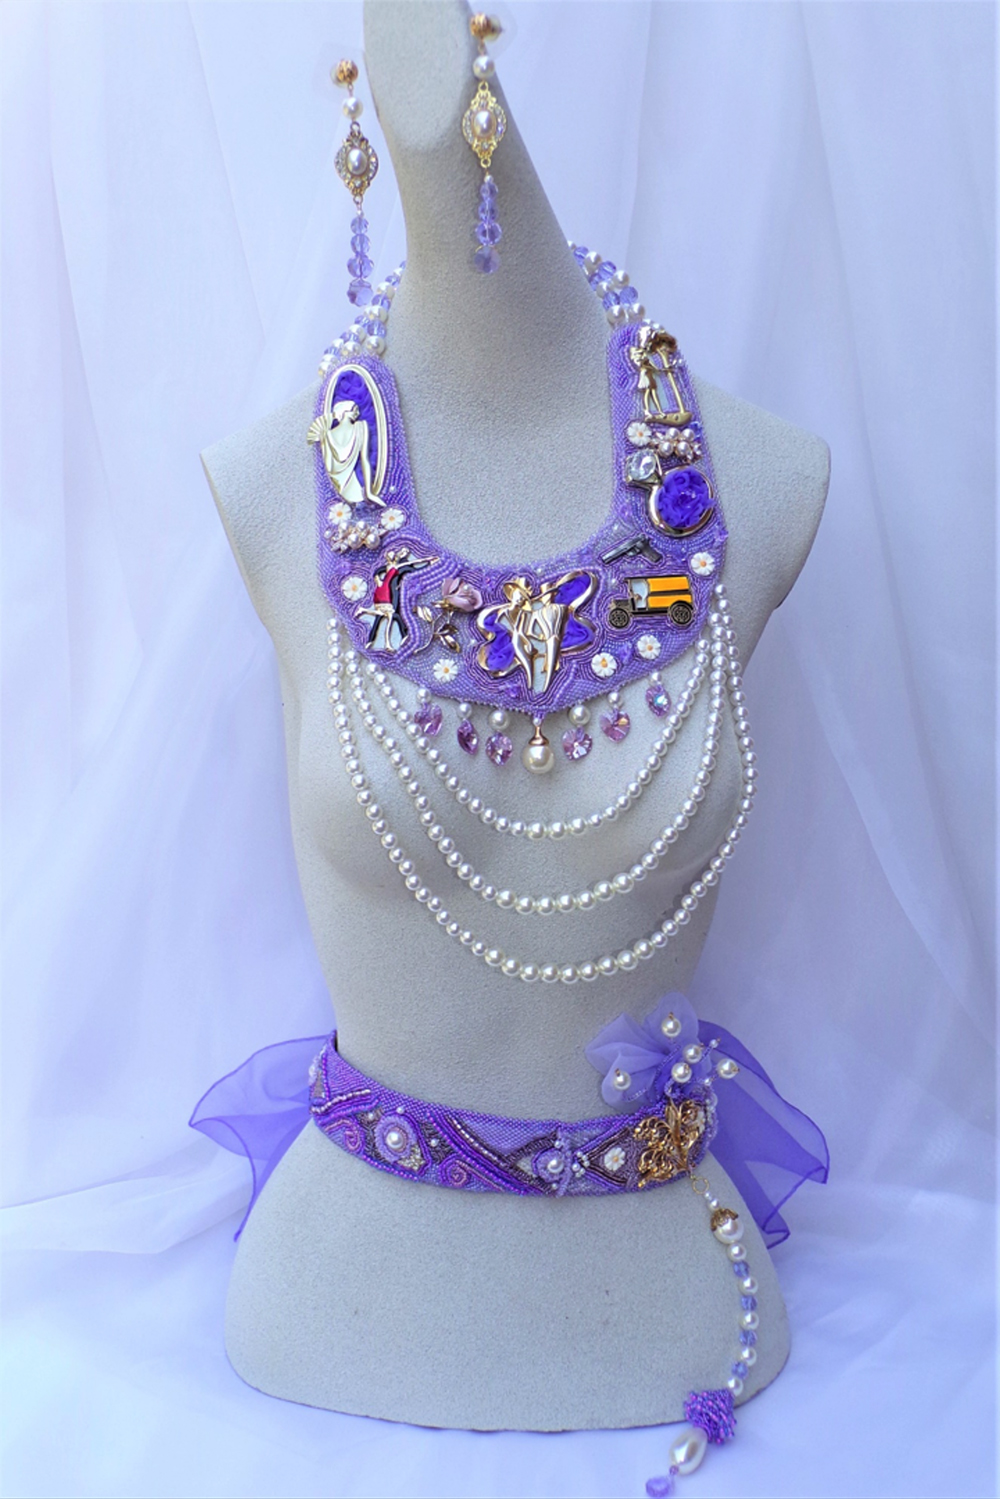 "The Great Gatsby" inspired jewelry by Tatiana Van Iten